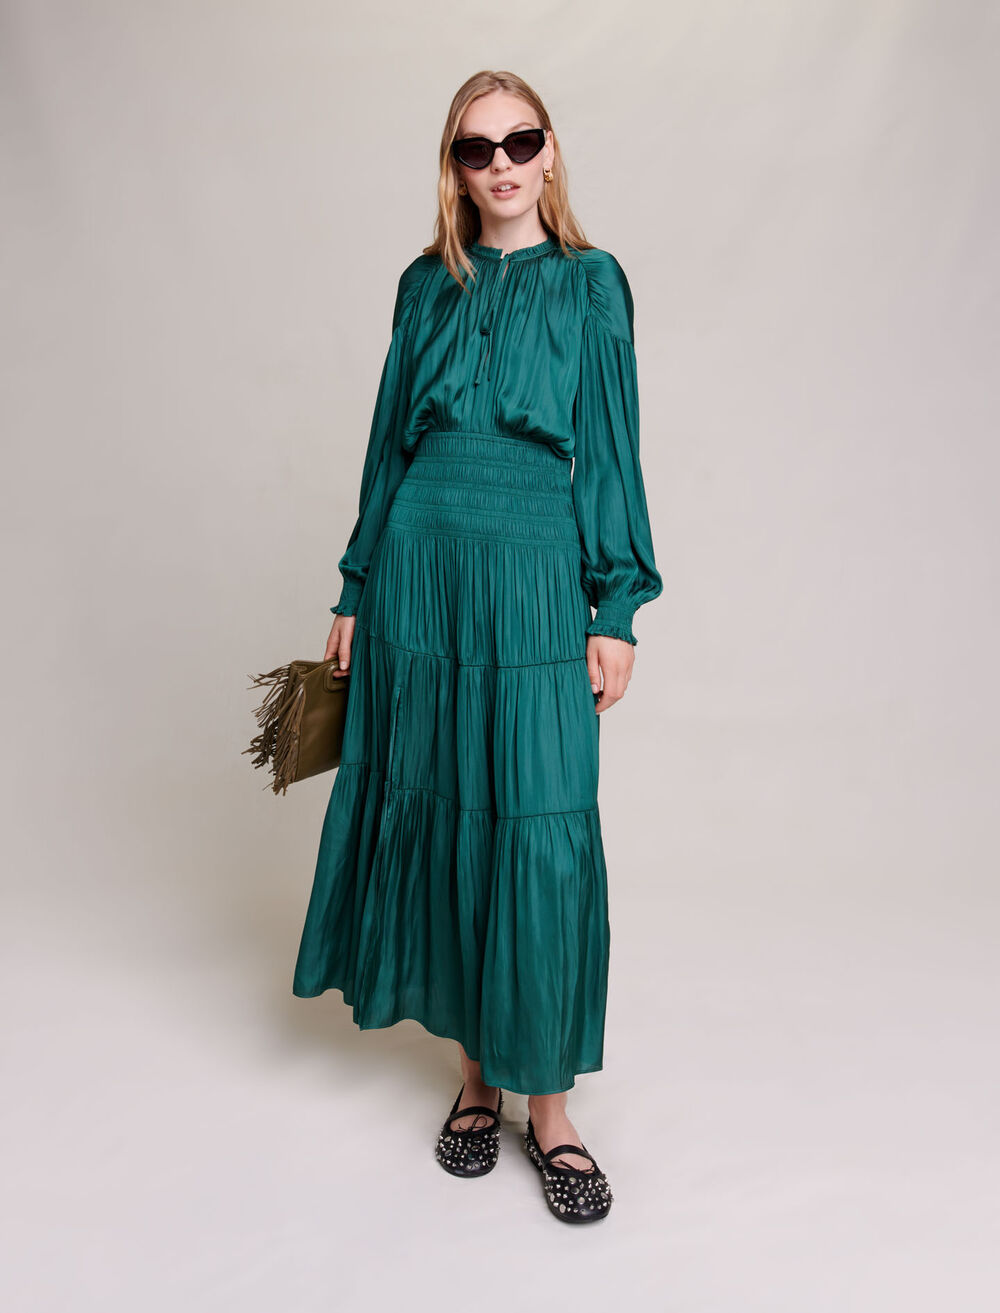 Bottle Green featured SATIN-LOOK MAXI DRESS